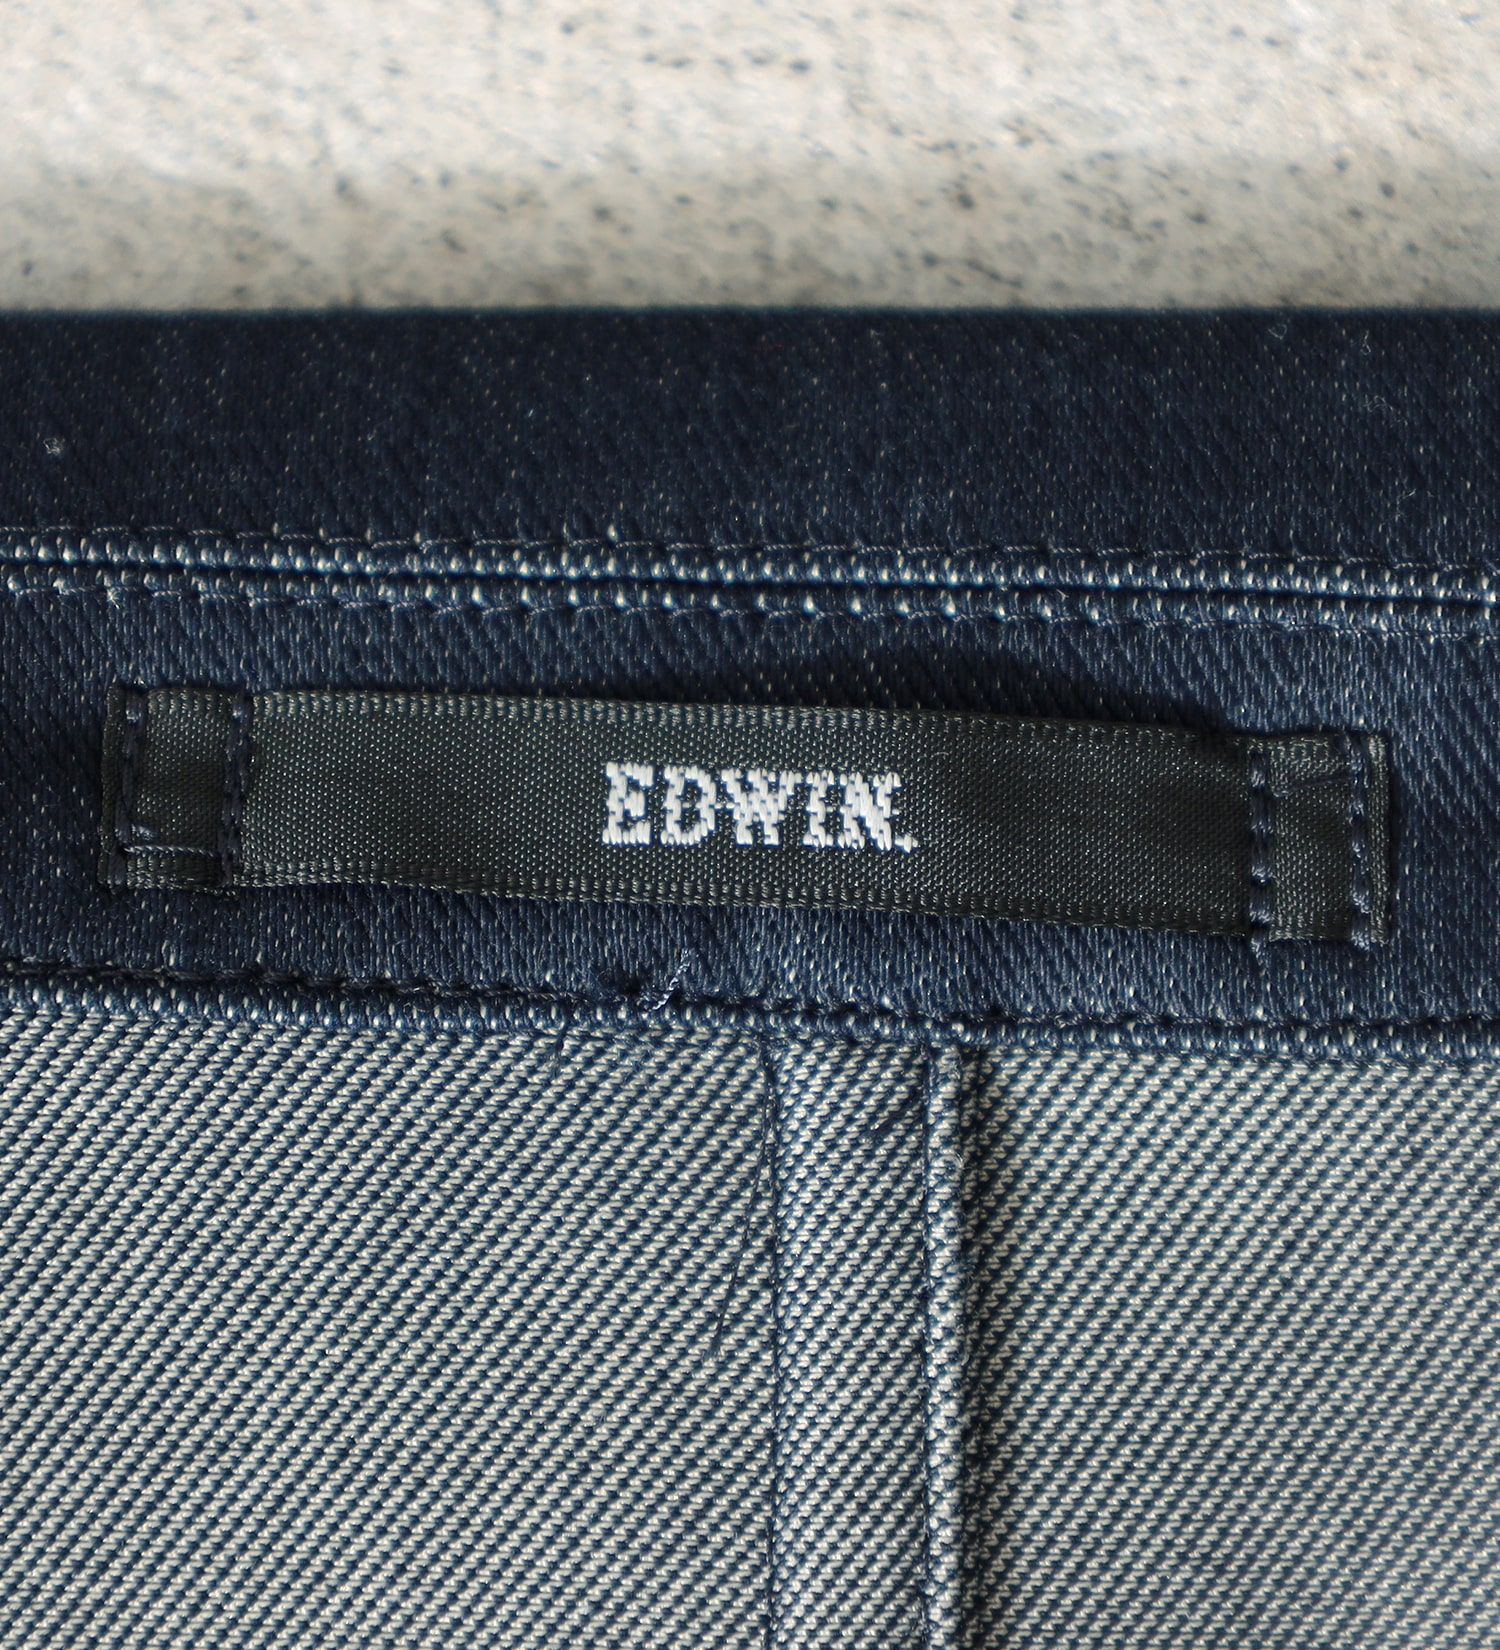 EDWIN(エドウイン)のデニスラ テーラードジャケット|ジャケット/アウター/テーラードジャケット/メンズ|インディゴブルー